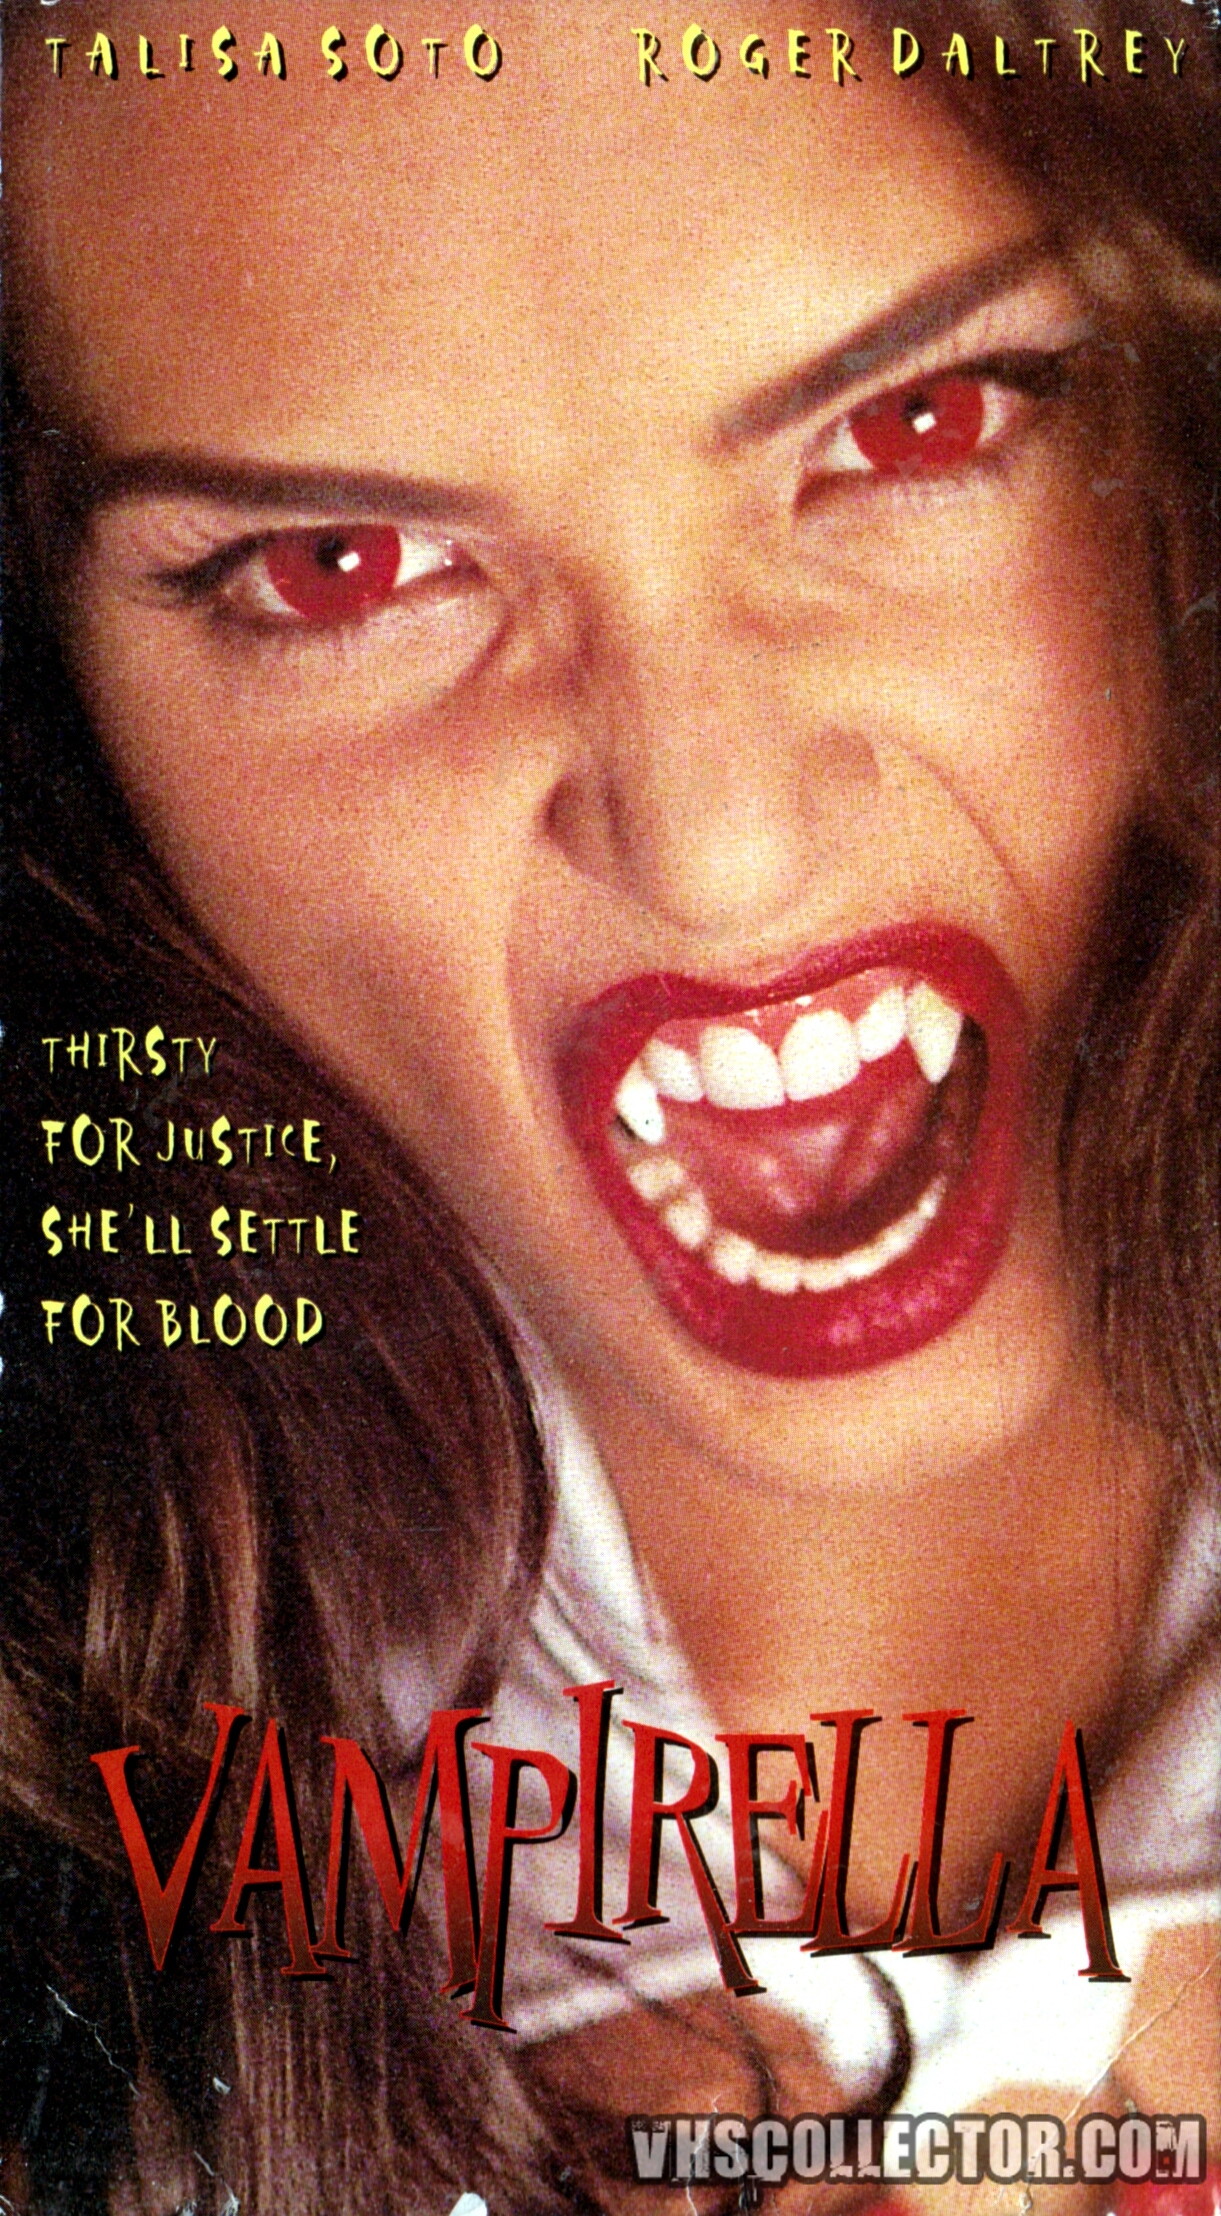 Vampirella | VHSCollector.com